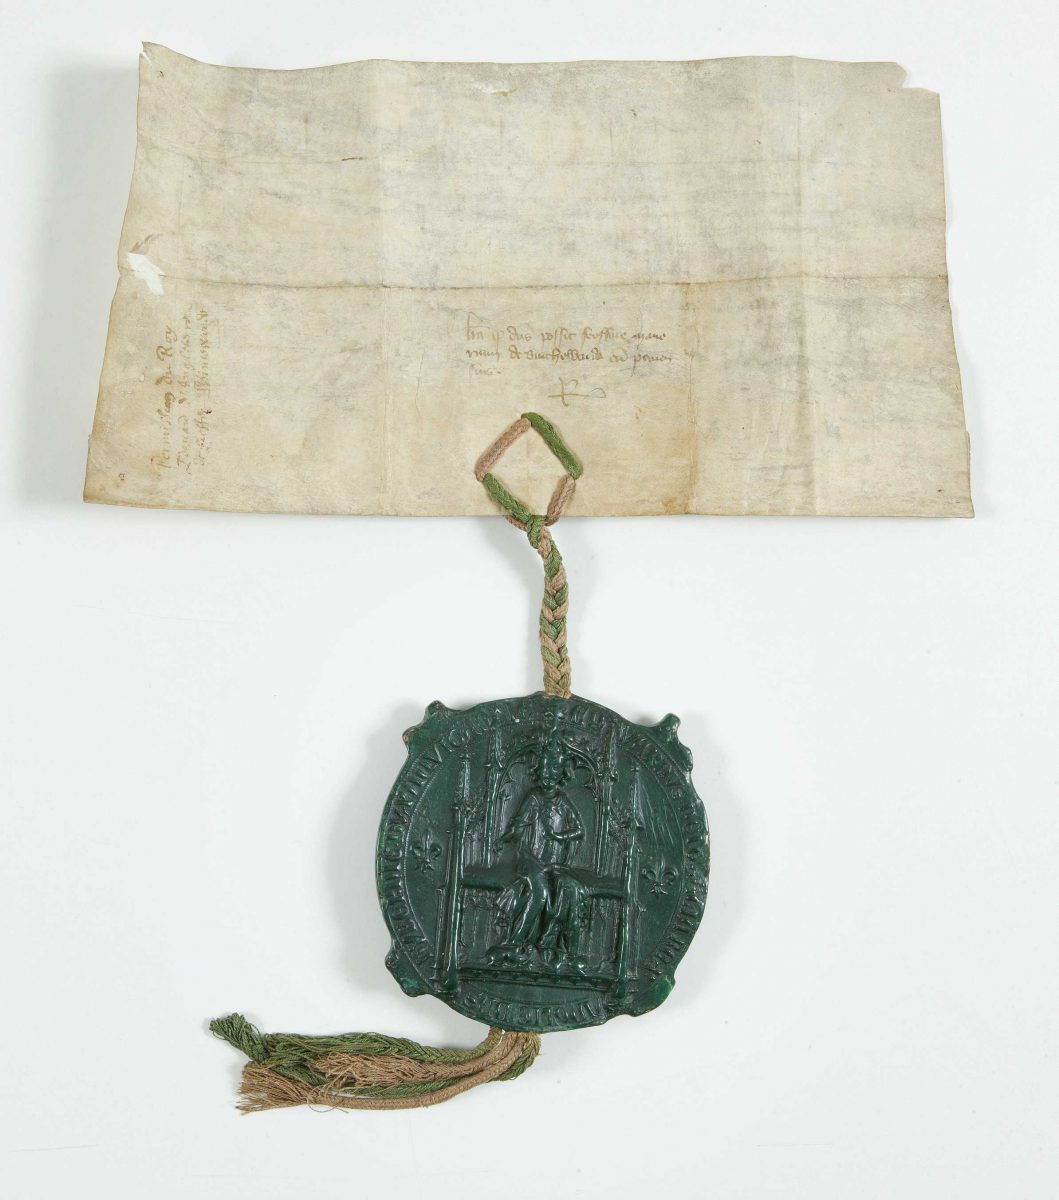 Charte d’Edouard III, confirmant à l’archevêque la terre de Bentworth